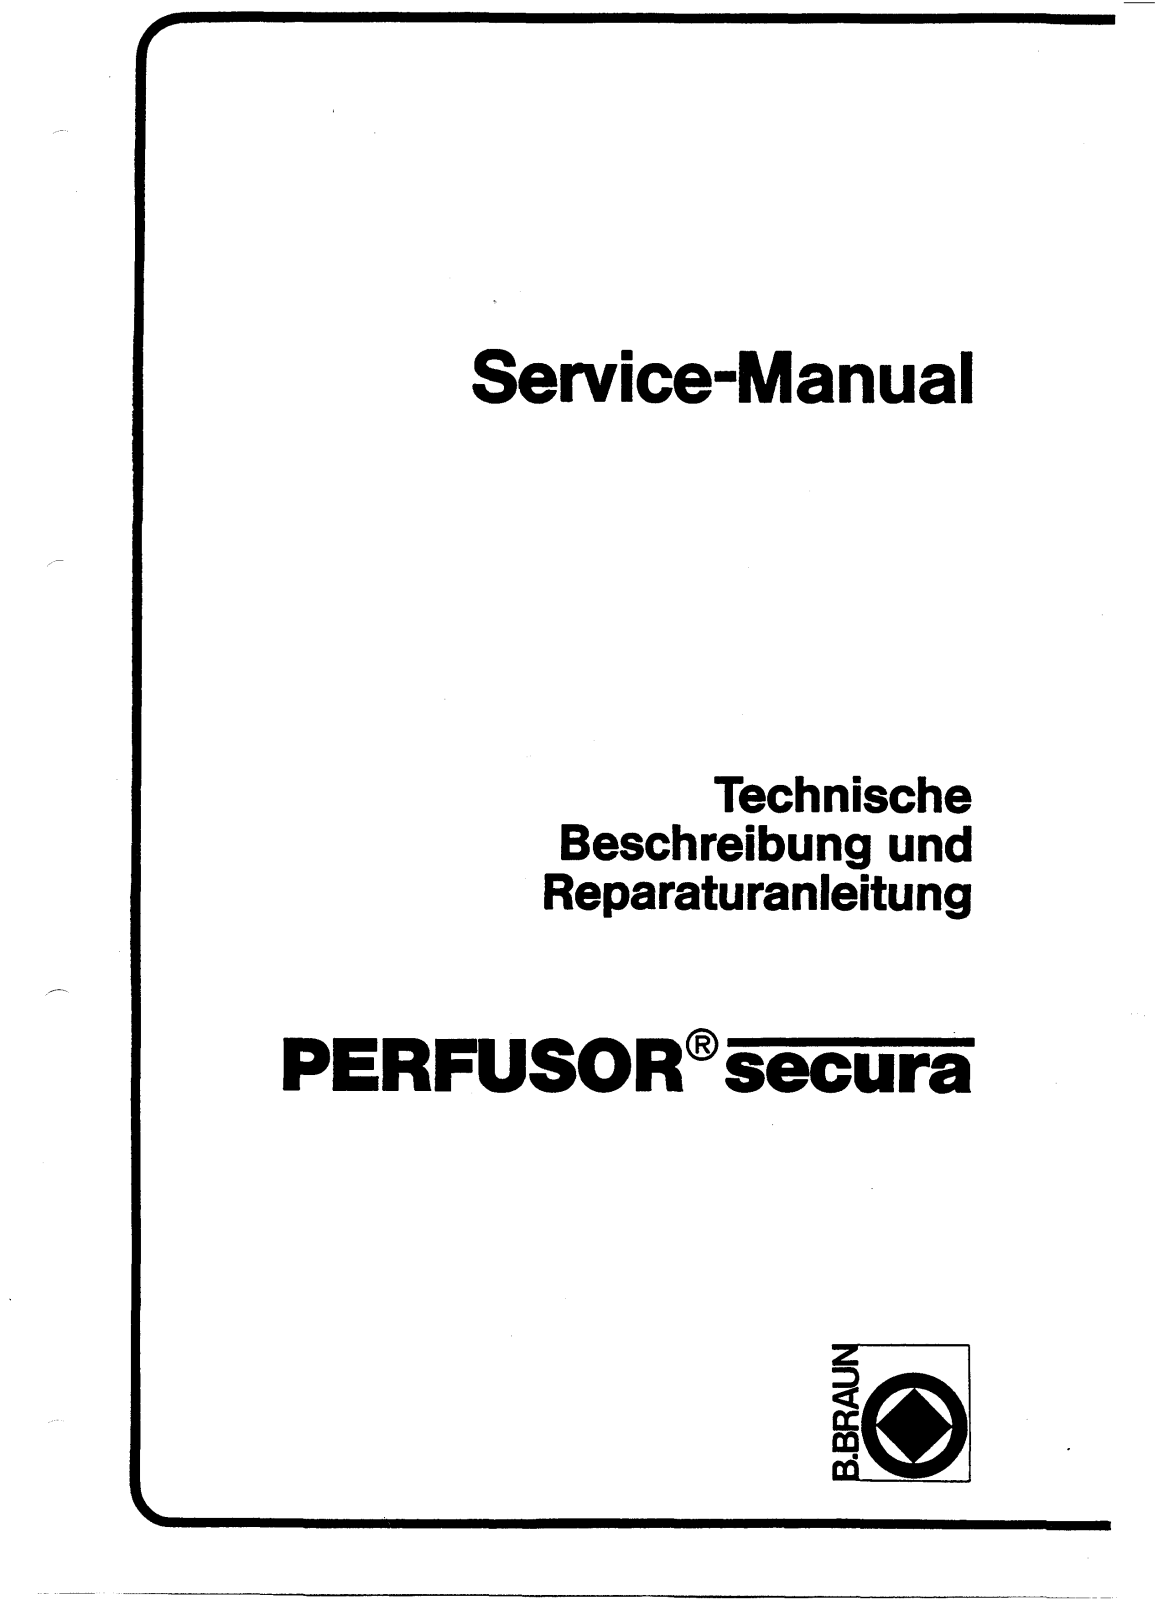 B Braun Perfusor Secura User manual